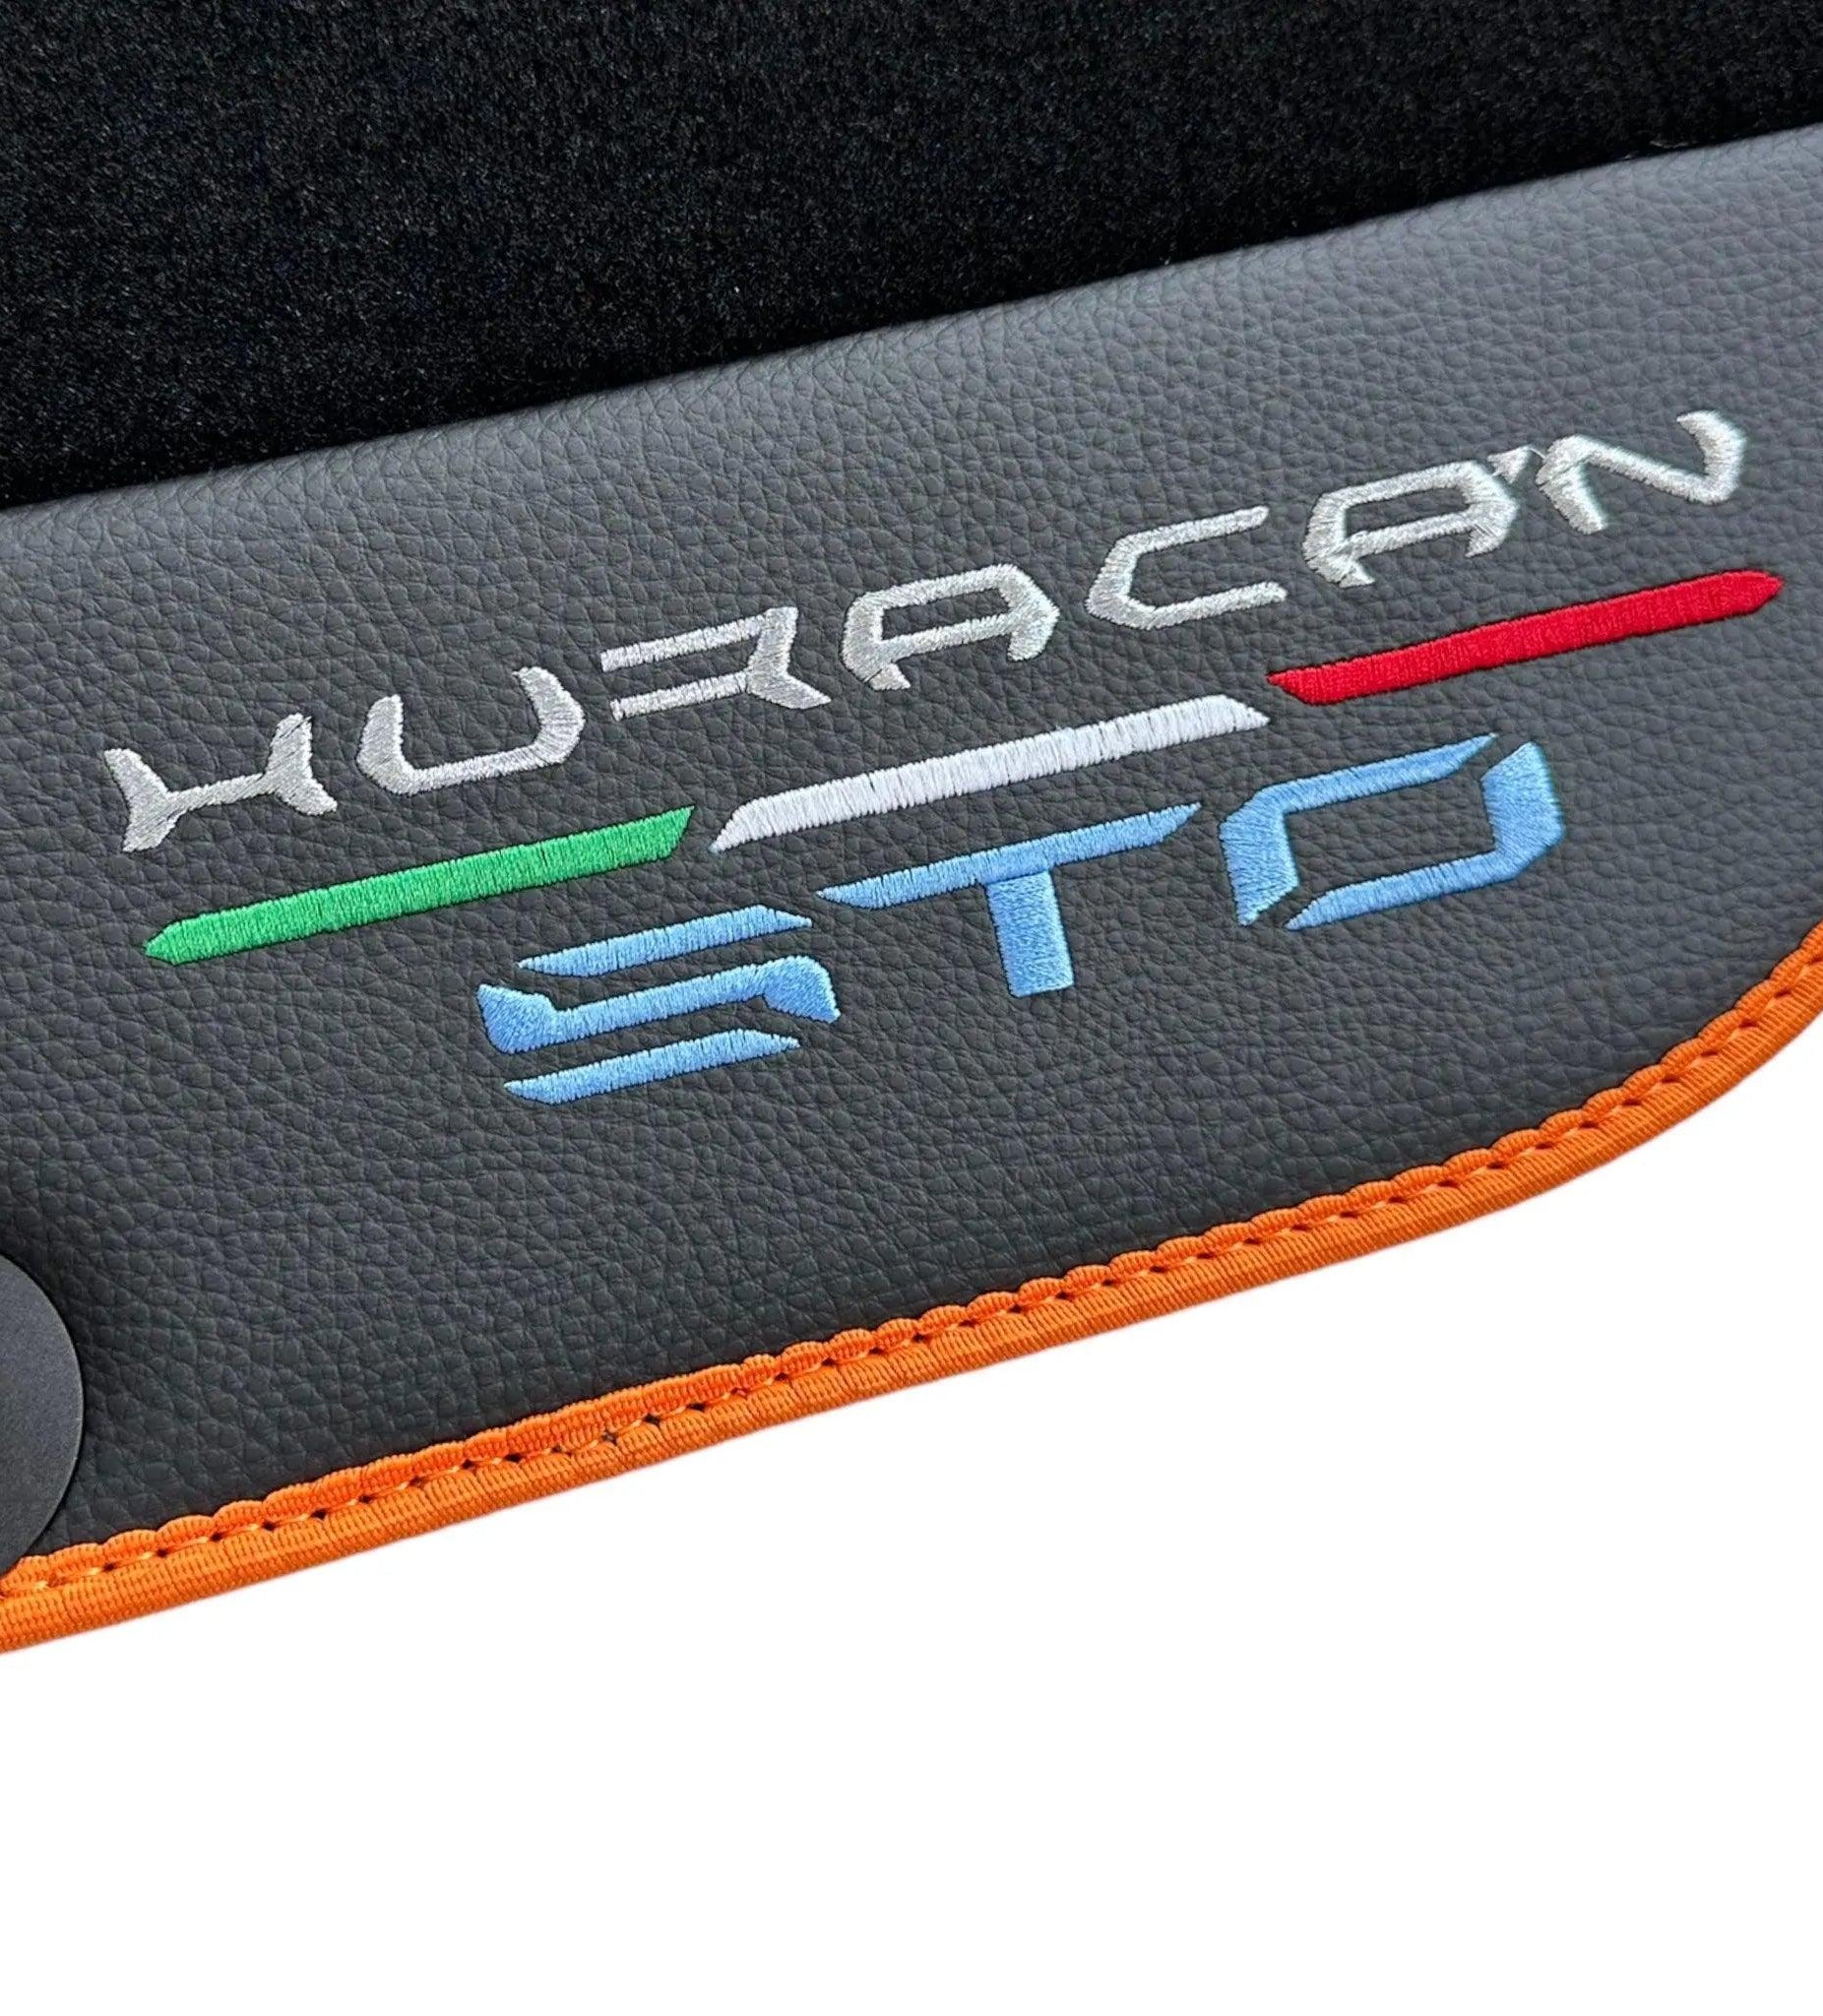 Black Floor Mats for Lamborghini Huracan STO With Black Leather and Orange Trim - AutoWin